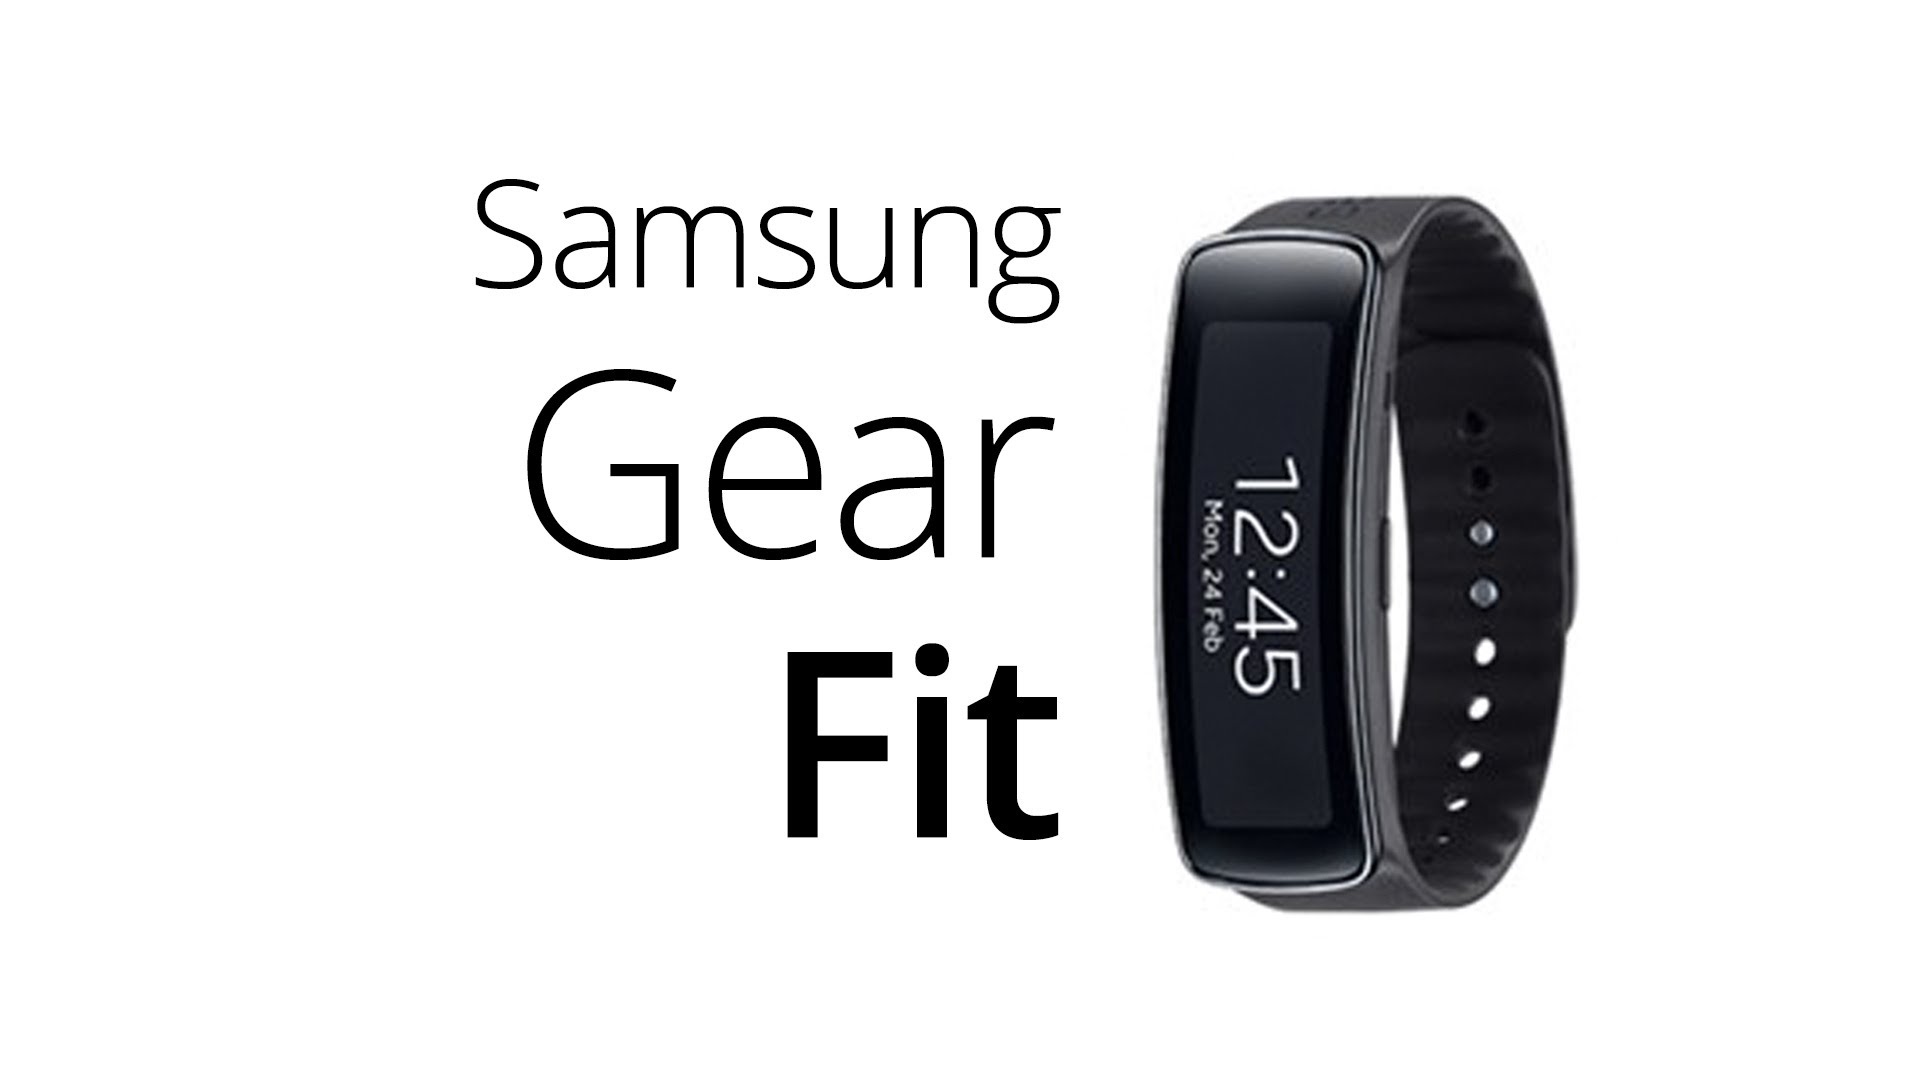 Самсунг Гир фит 3. Трафарет Samsung Gear Fit 2 Pro. Samsung Gear Fit 2 Pro не заряжается. Геар с3 самсунг циферблат зелёные точки. Galaxy gear fit 3